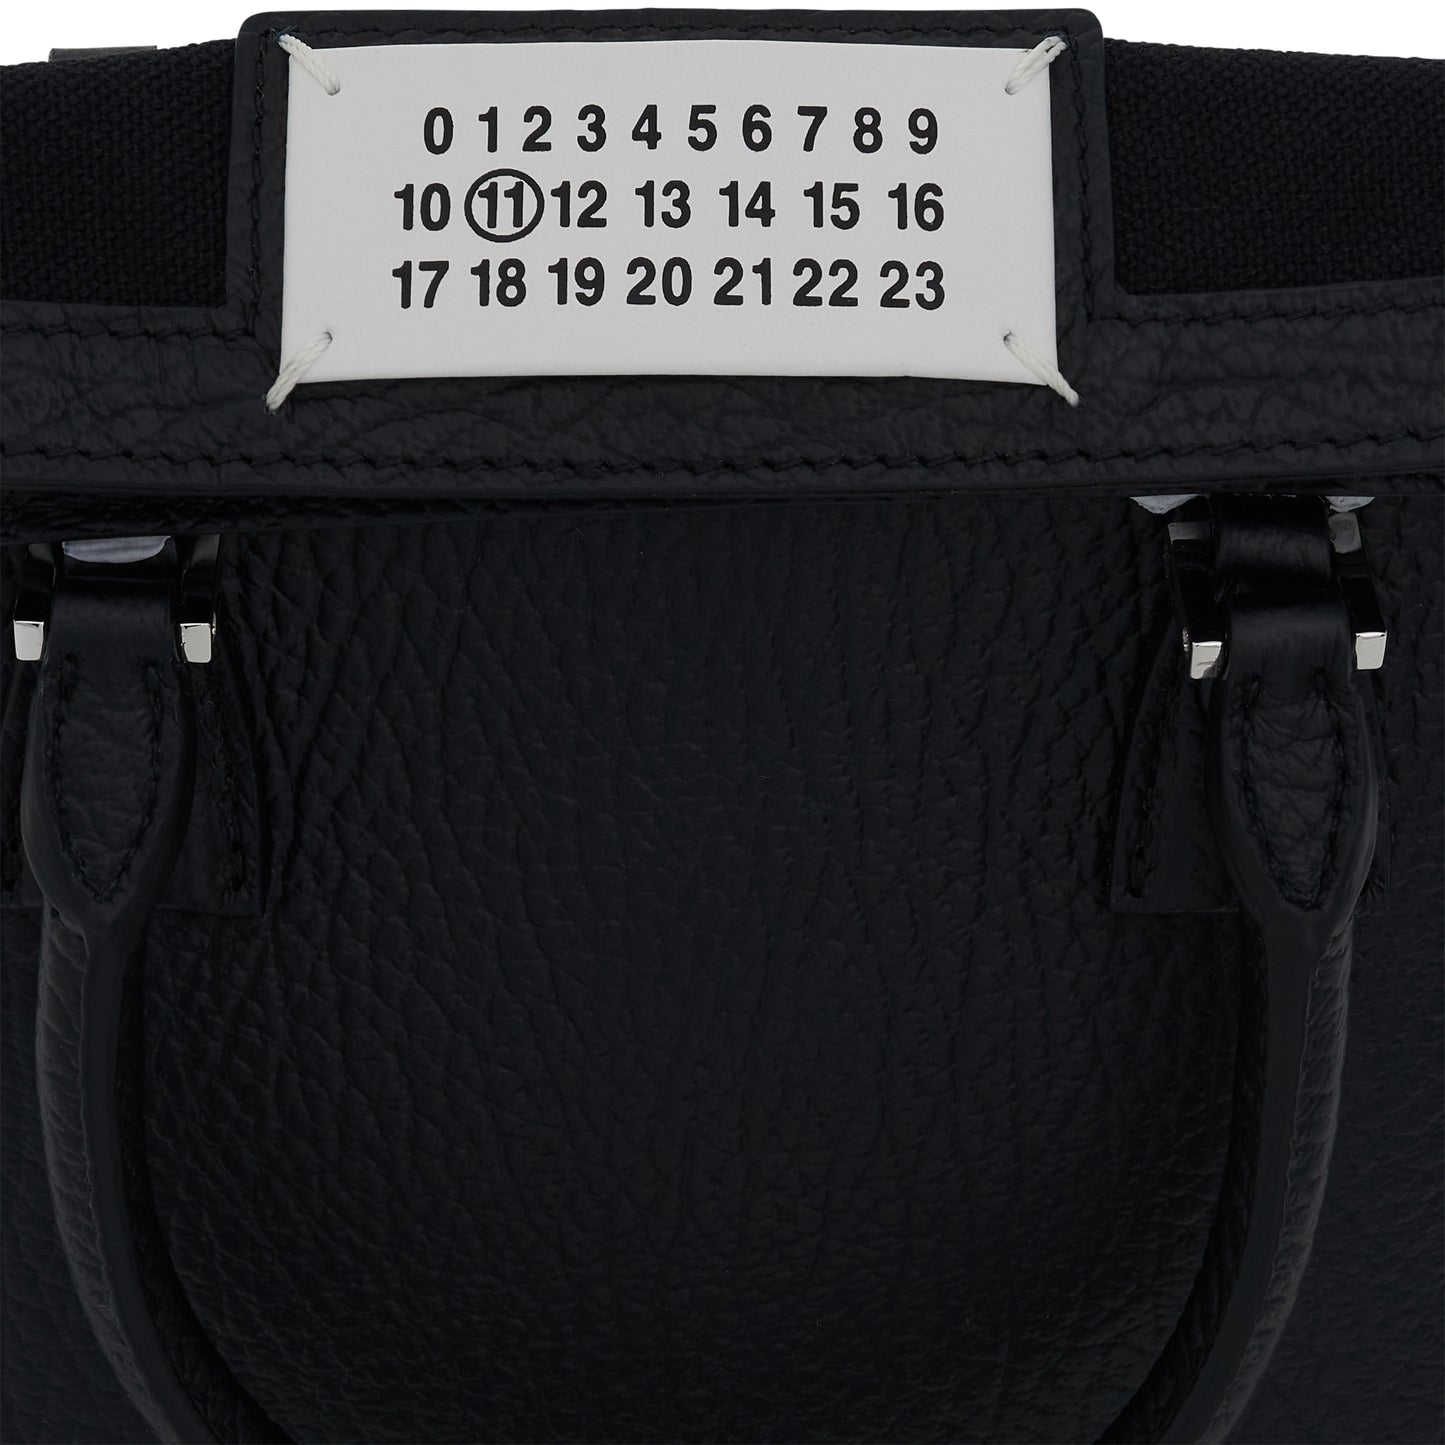 5AC Micro Shoulder Bag in Black